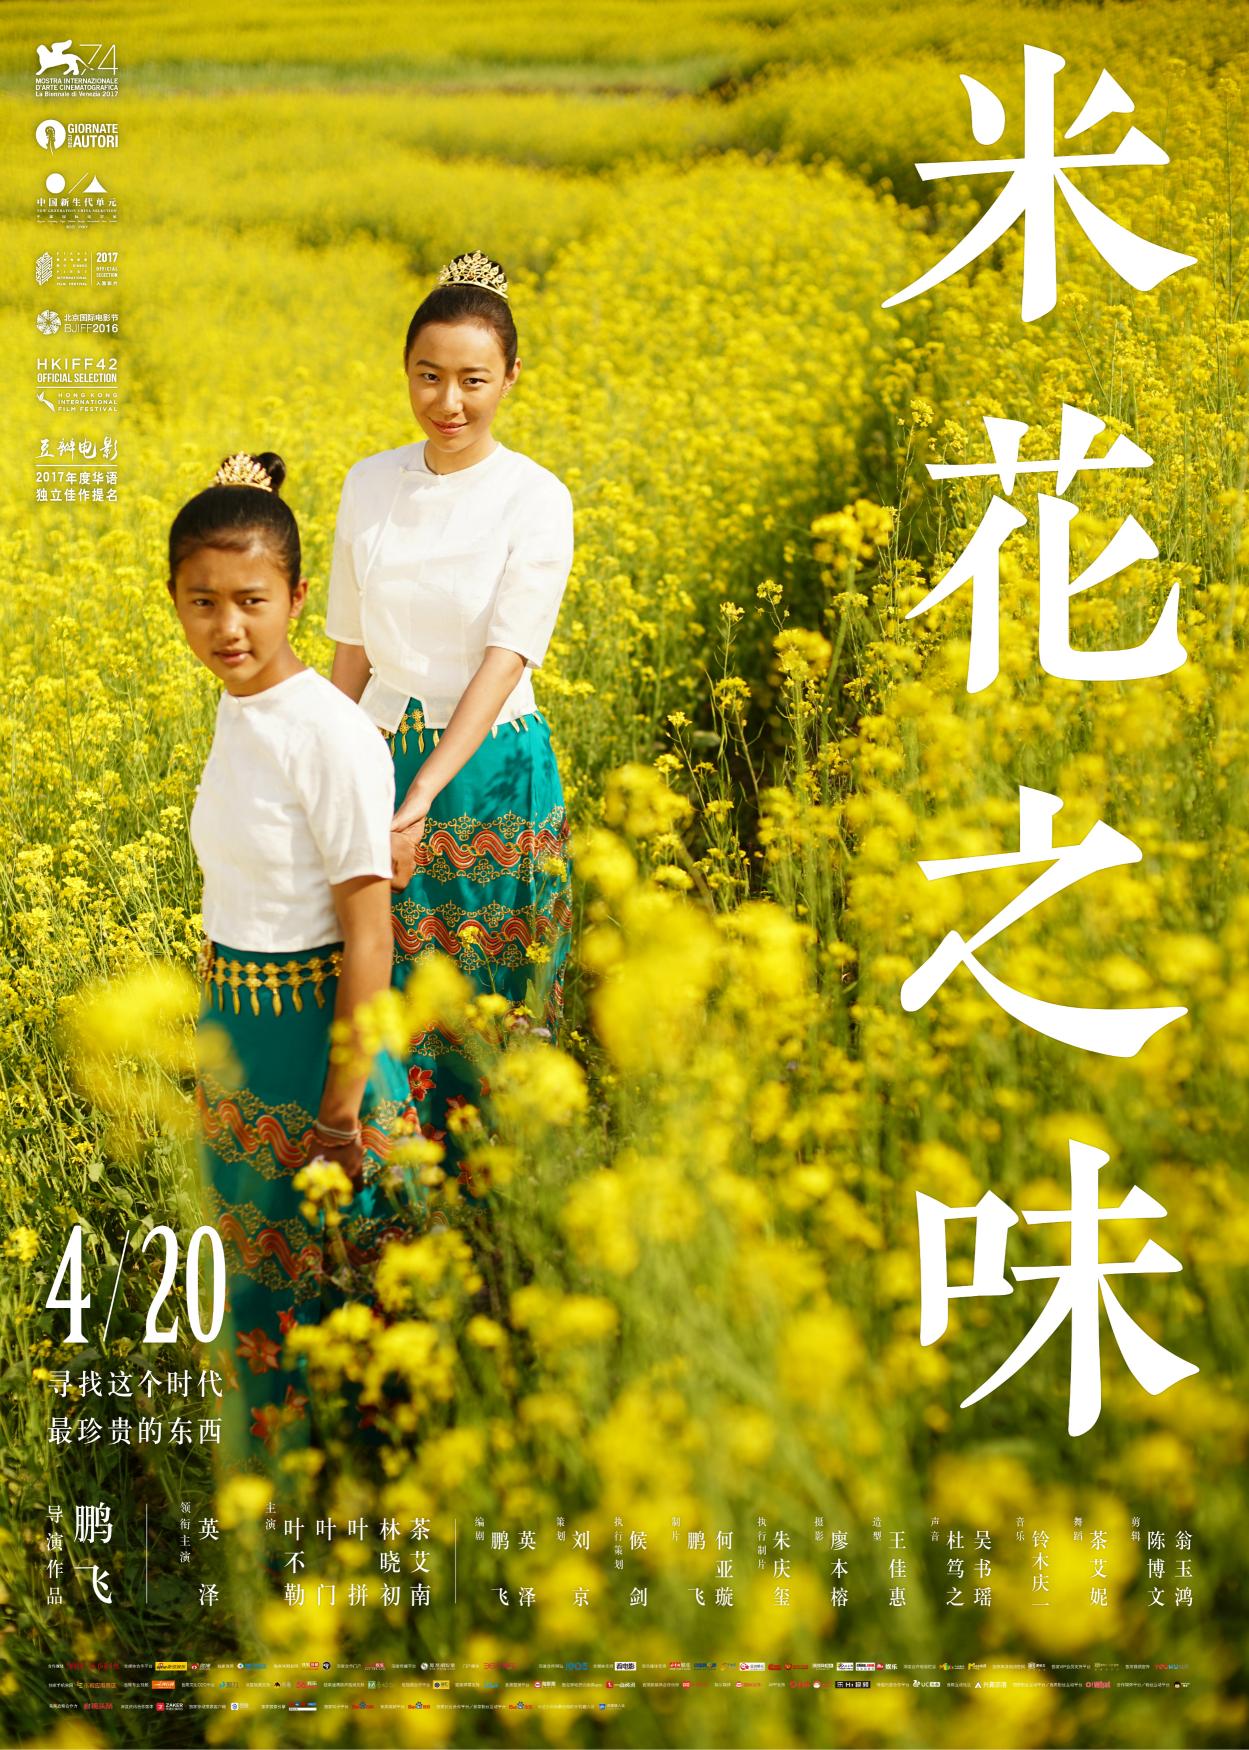 米花之味 - The Taste of Rice Flower